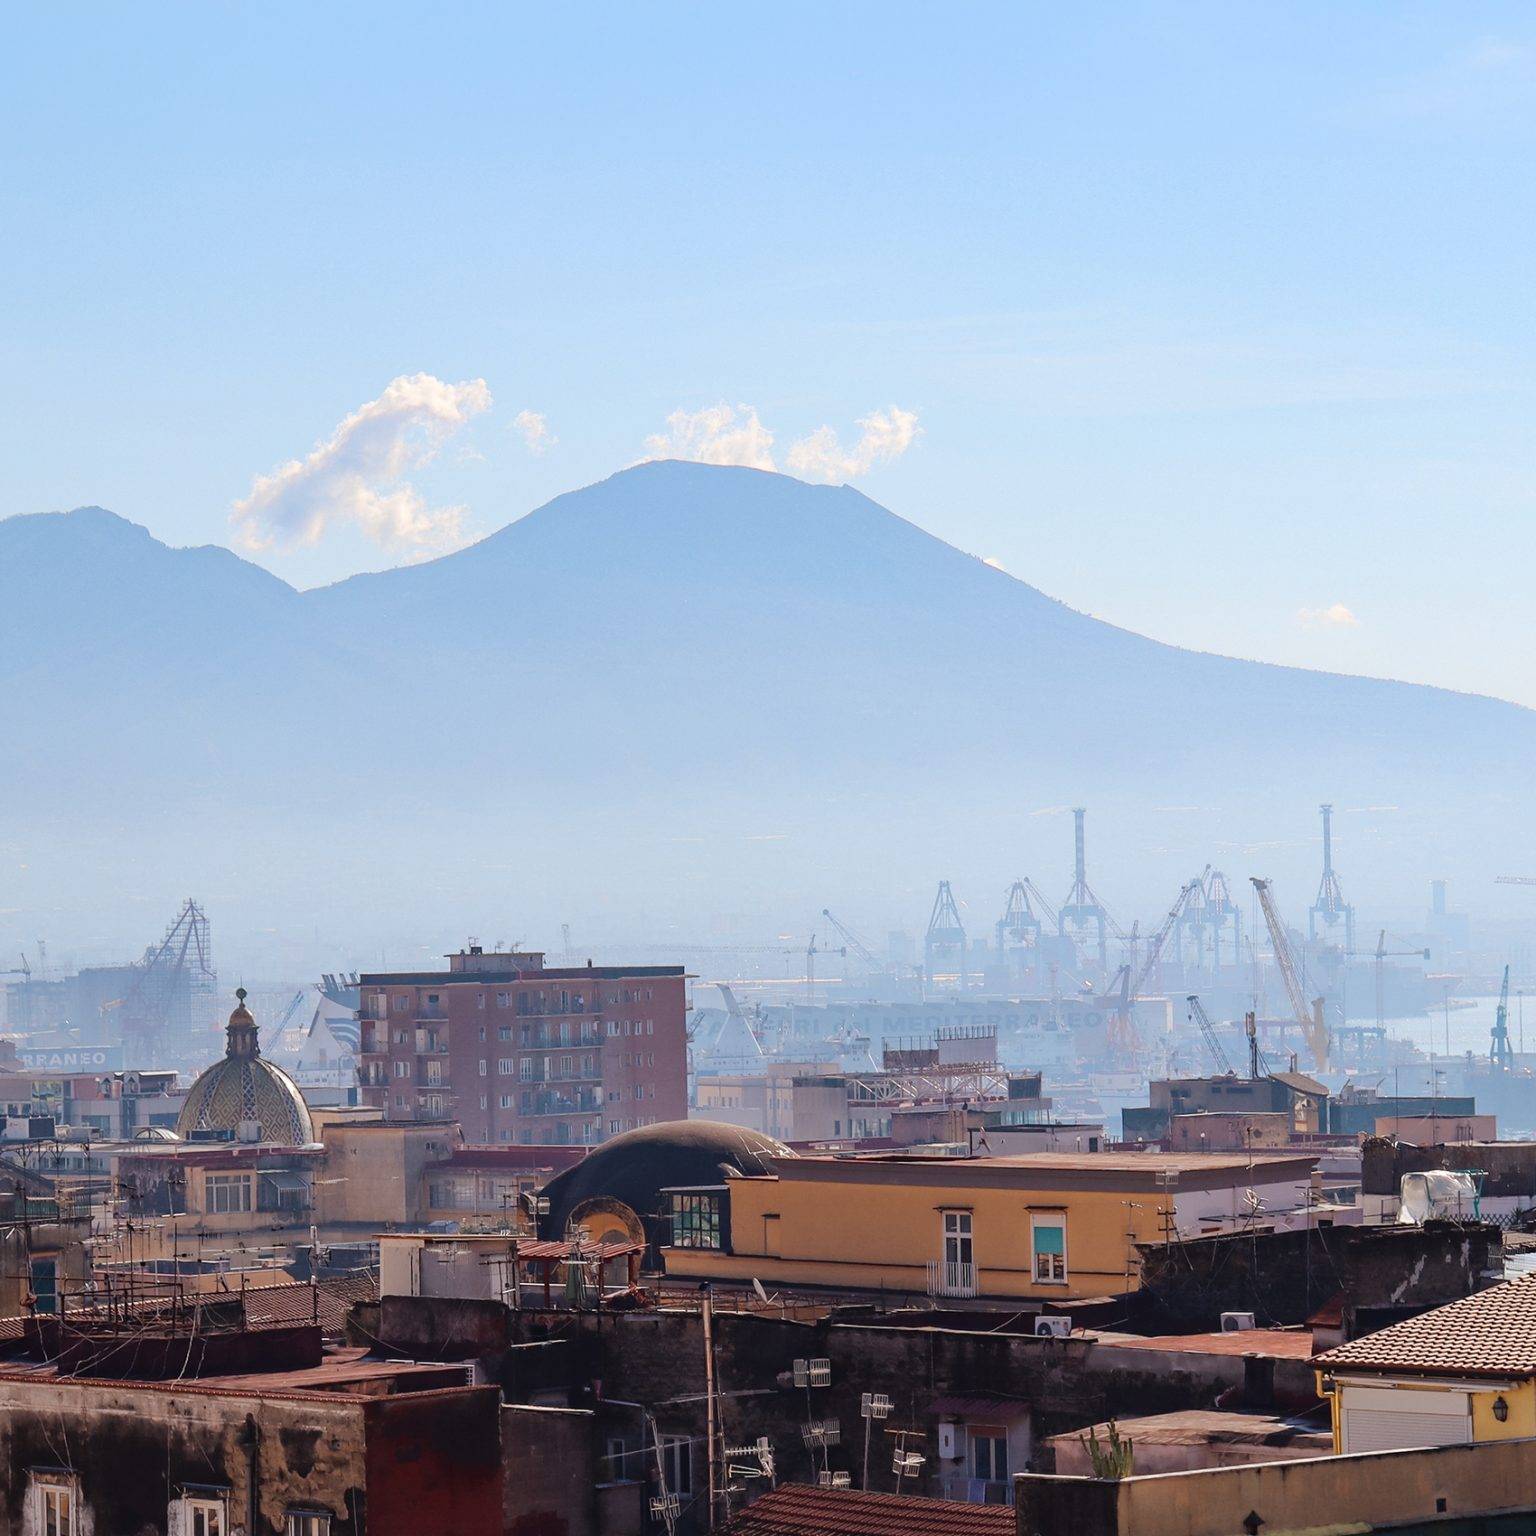 Der Vulkan Vesuv liegt hinter der sandfarbenen Skyline Neapels im Nebel.